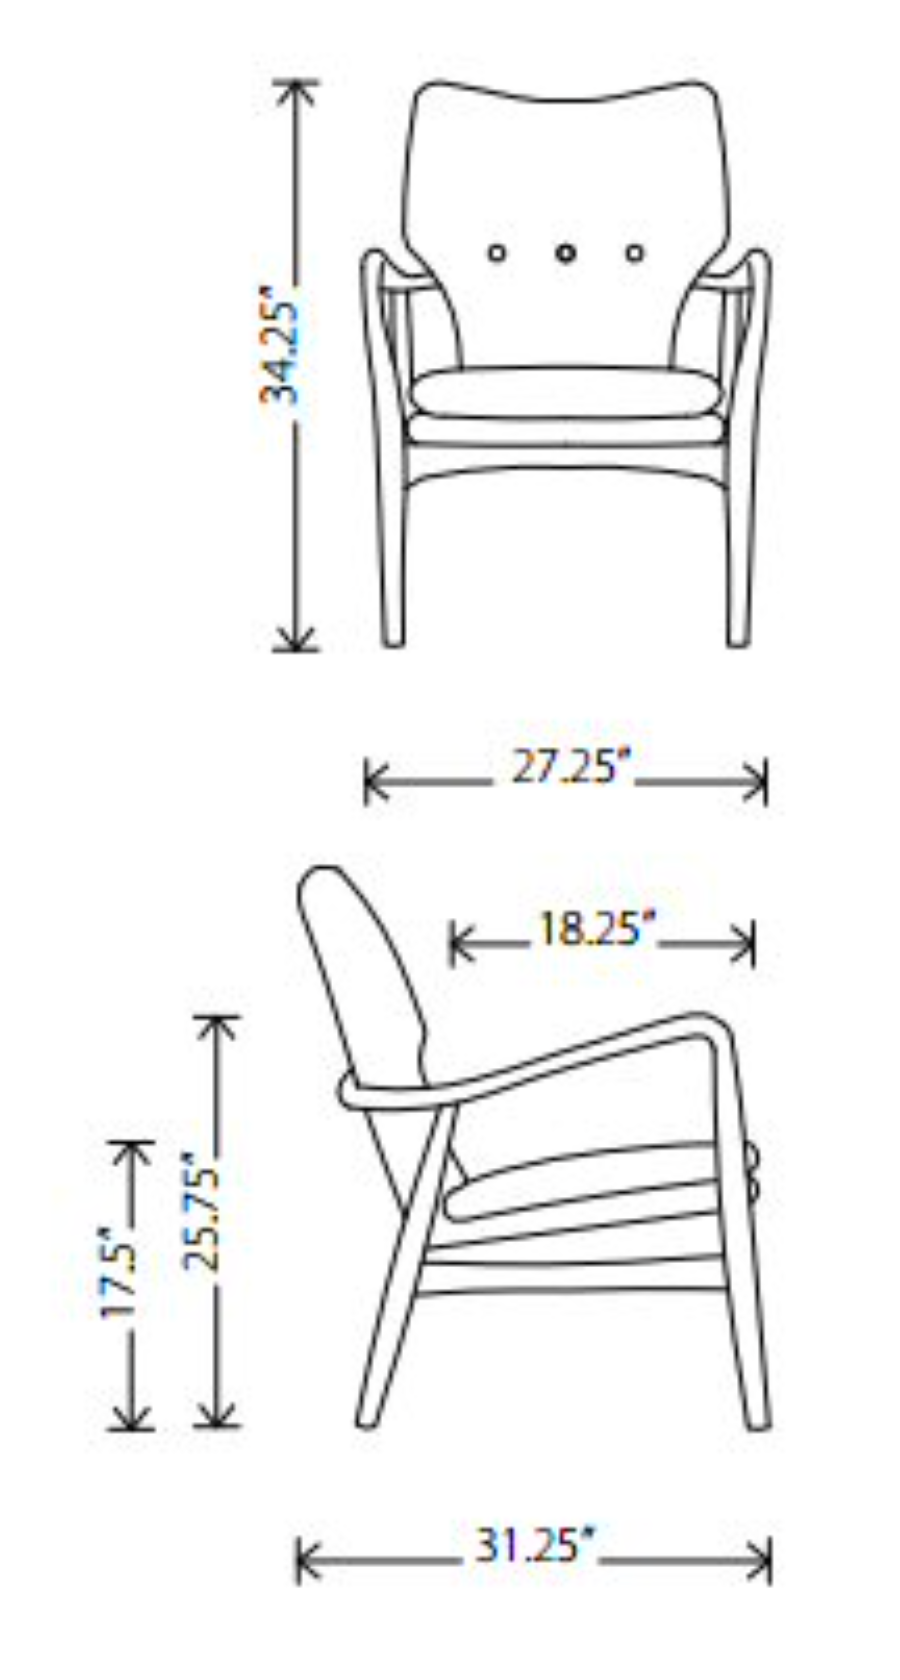 Nuevo Patrik Chair dimensions